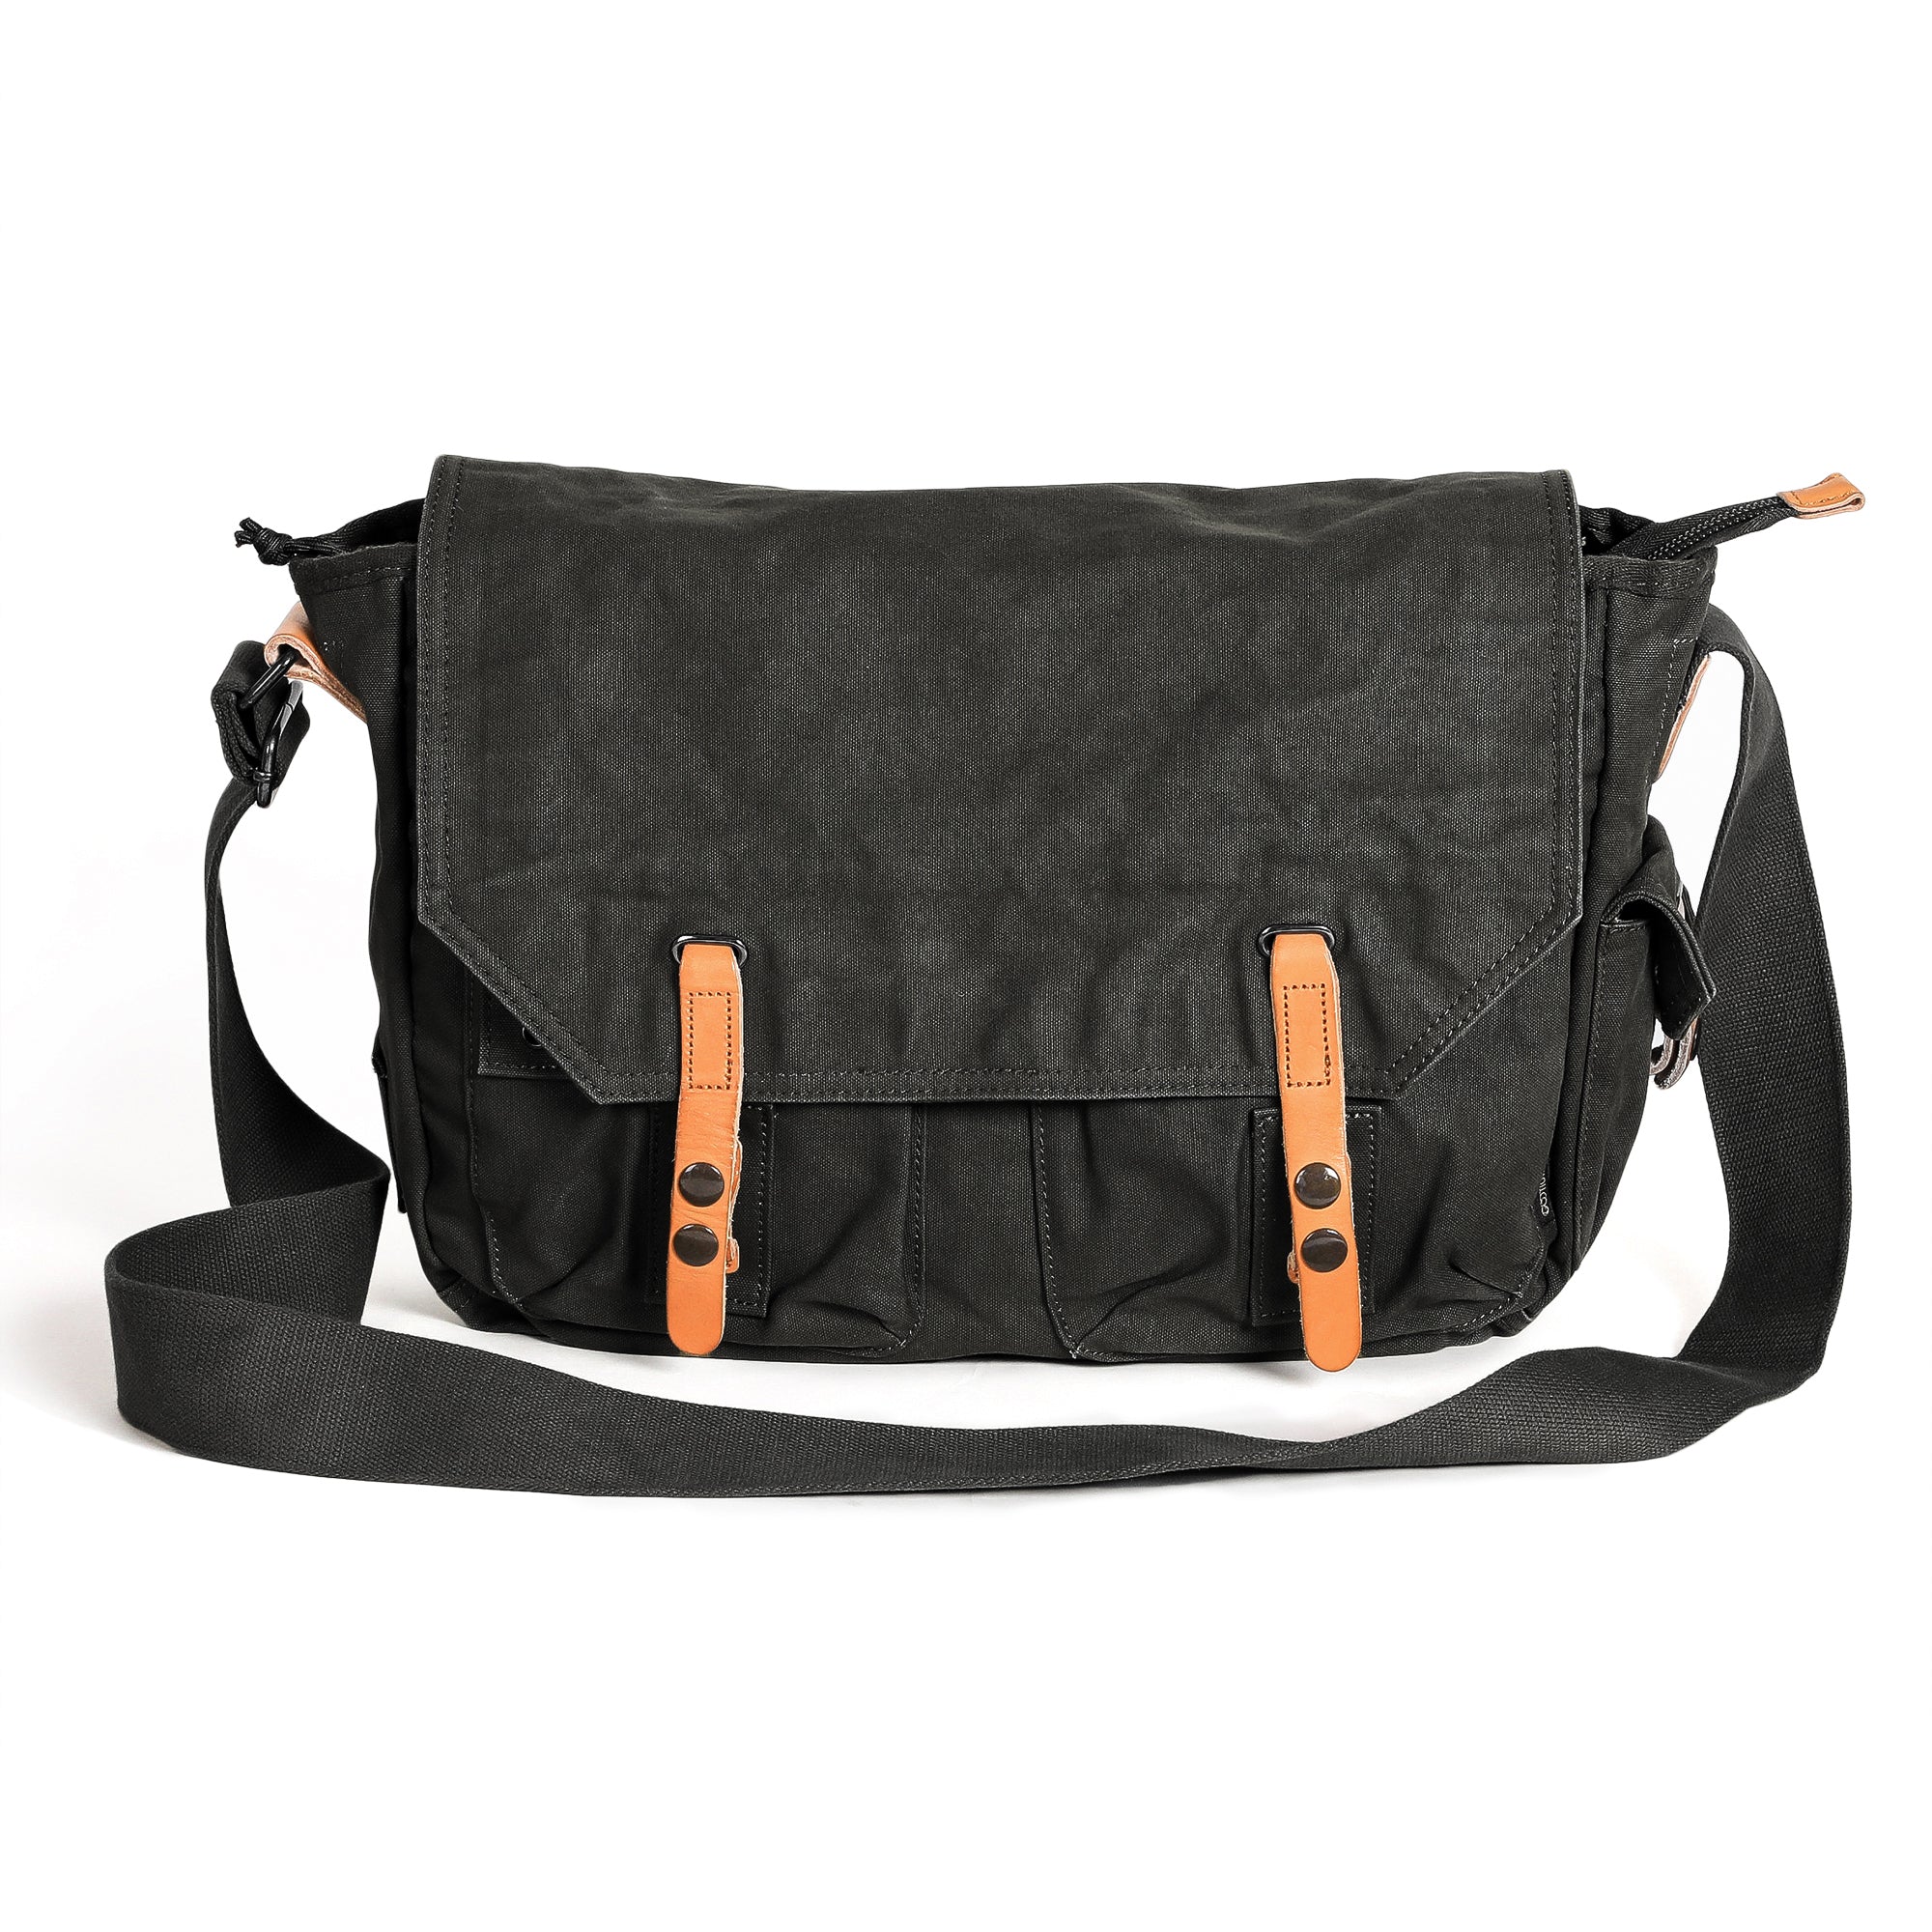 TOPWOLFS Canvas Messenger Bag Topwolf Small Crossbody Bag Casual Travel Working (Black)